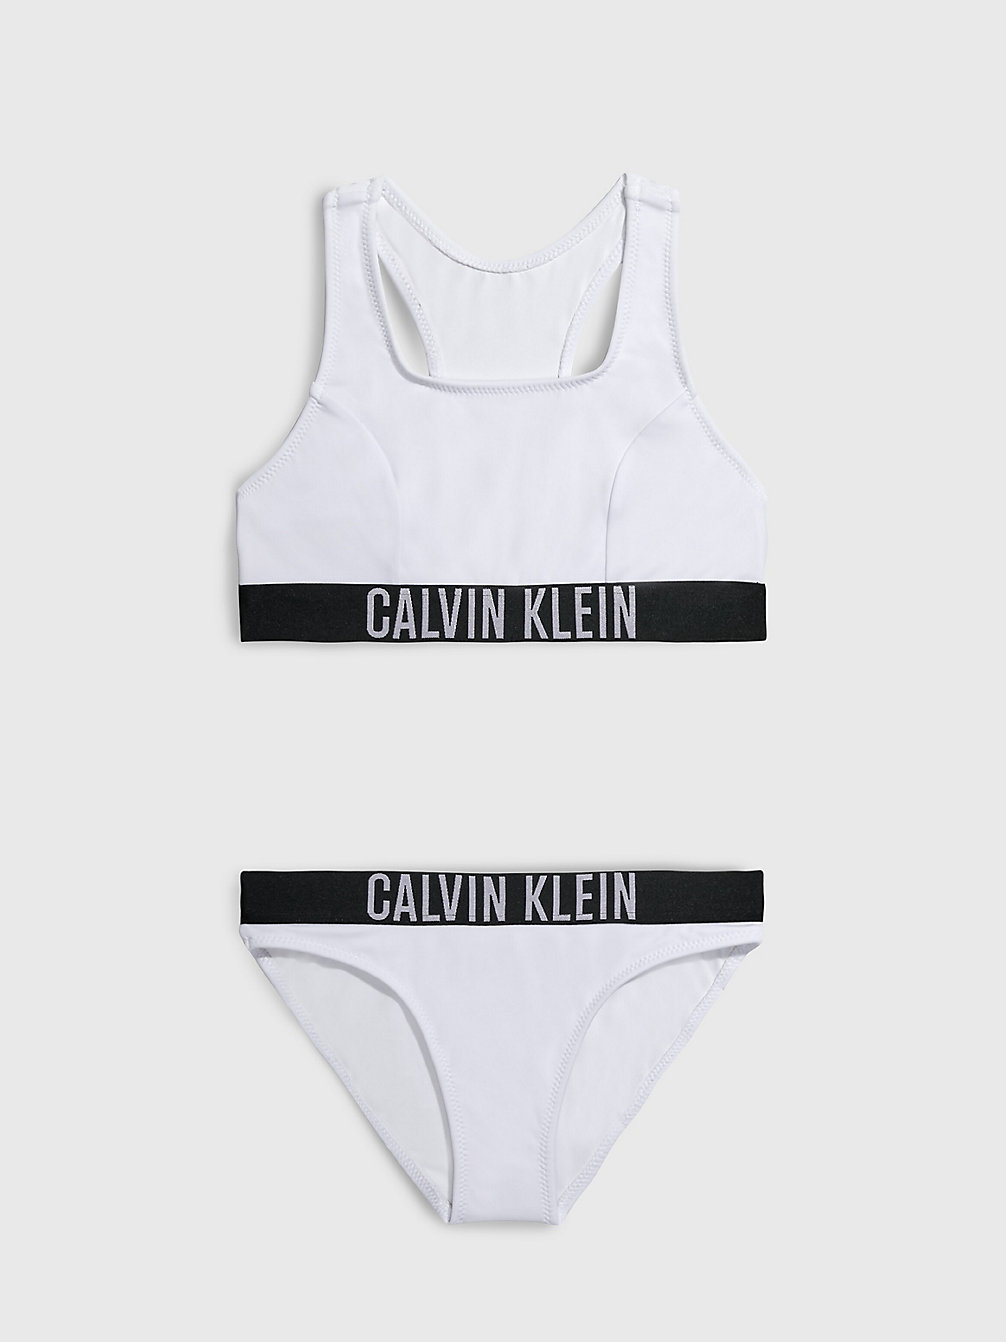 PVH CLASSIC WHITE Ensemble Bikini Brassière Pour Fille - Intense Power undefined girls Calvin Klein